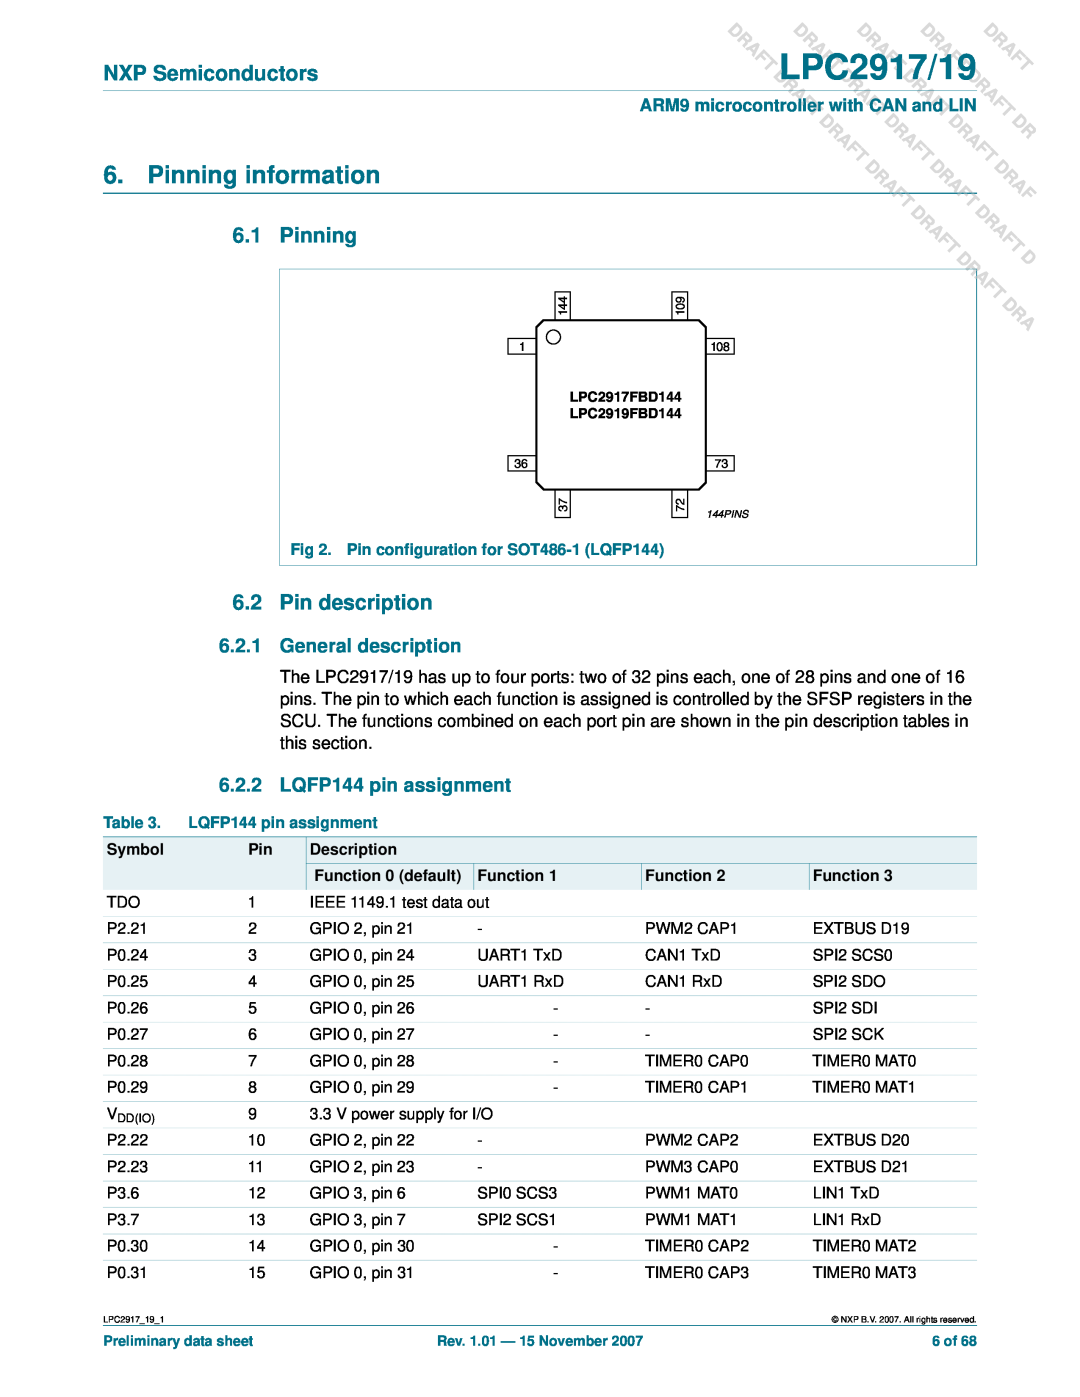 NXP Semiconductors LPC2919 Pinning information, General description, LQFP144 pin assignment, DLPC2917/19, Draft Draft 